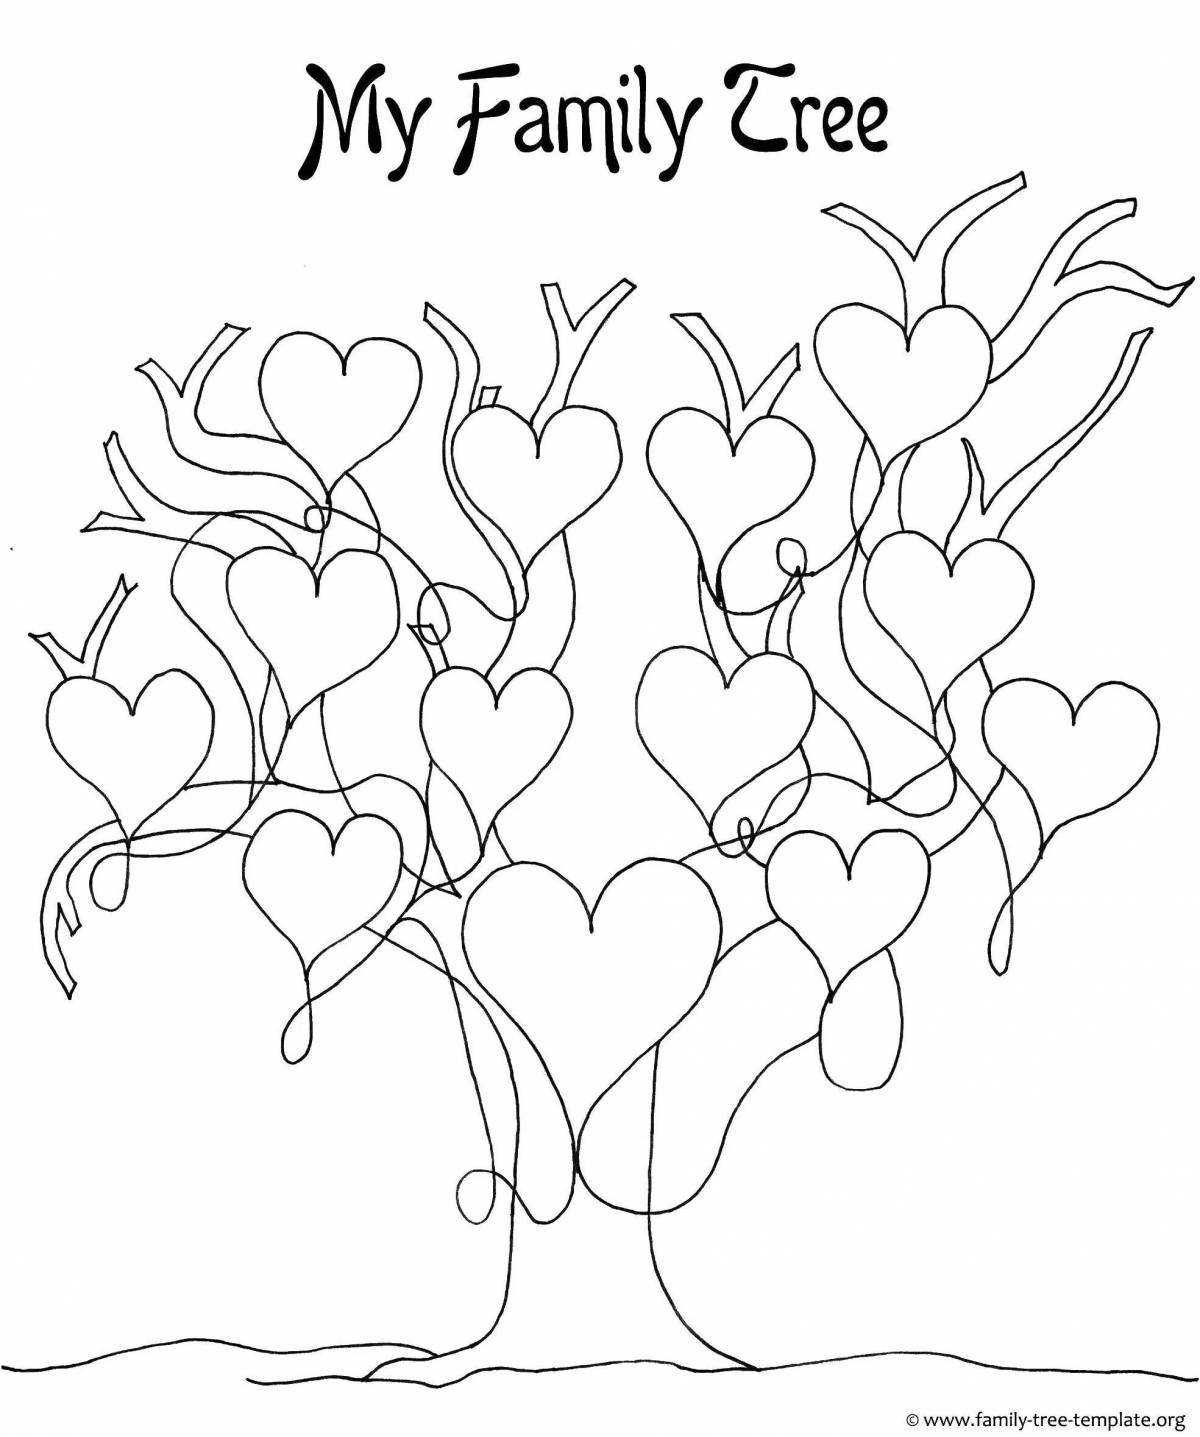 Creative family tree template